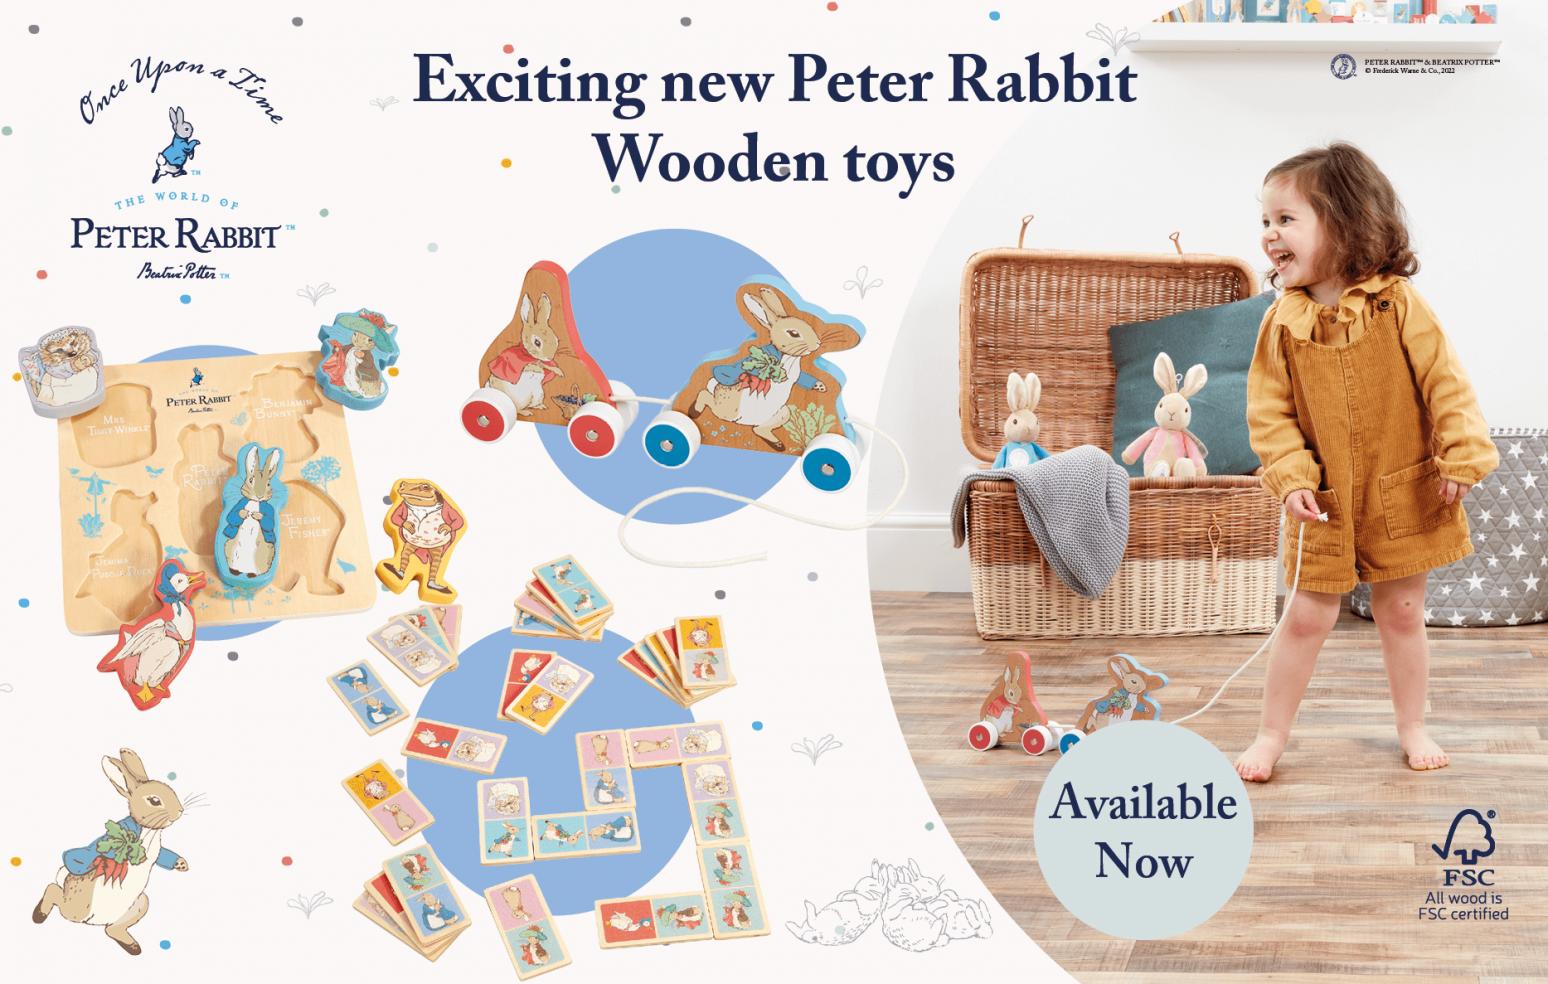 Peter rabbit wooden toys